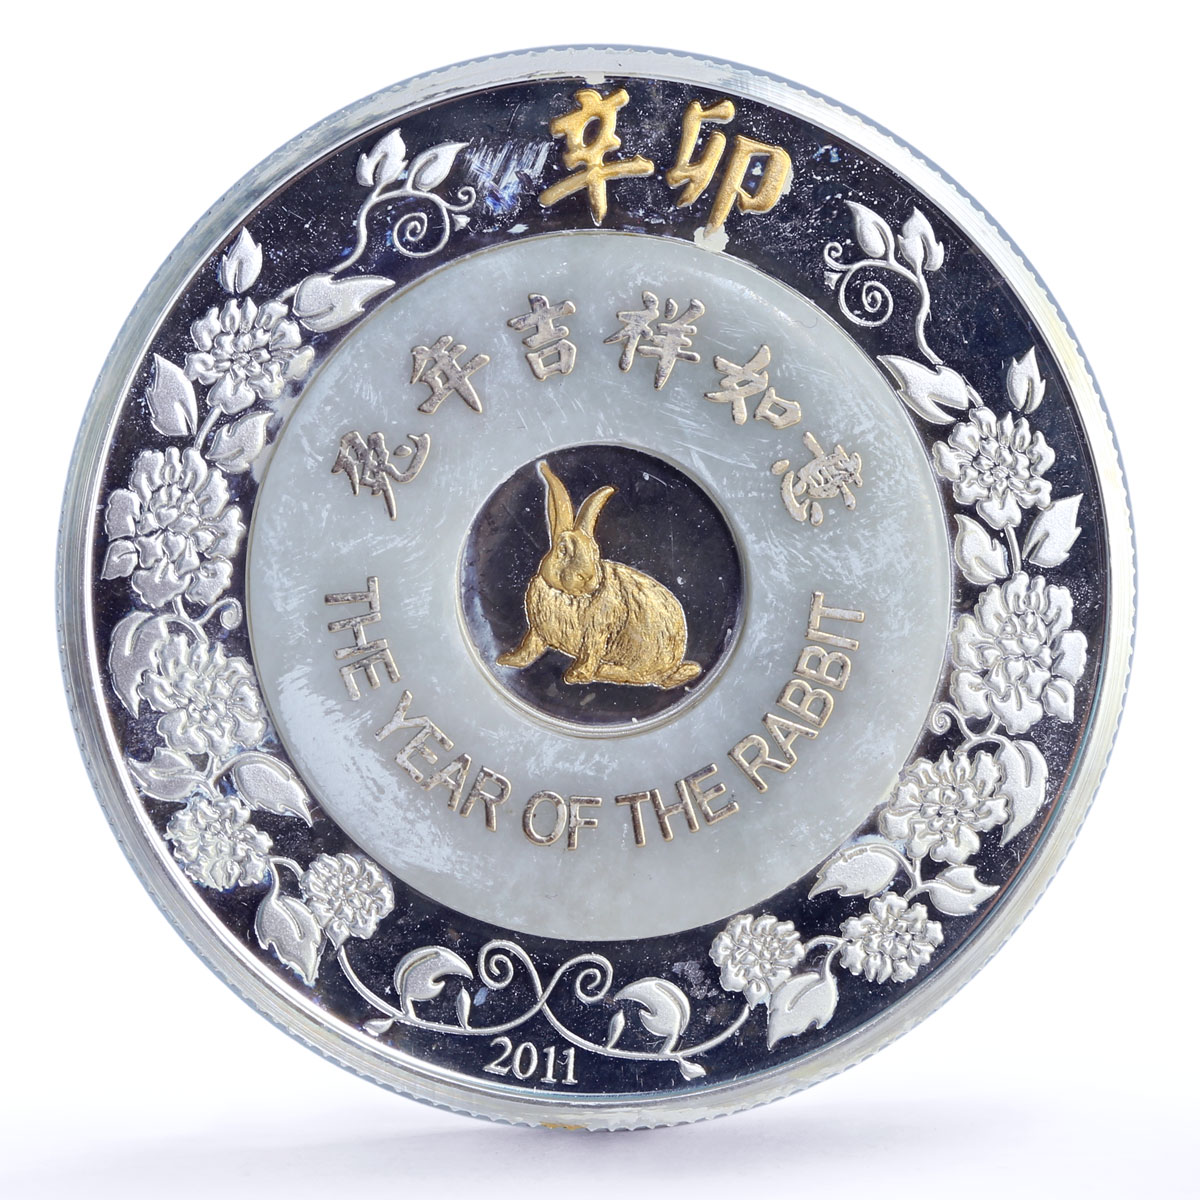 Laos 2000 kip Lunar Calendar Year of the Rabbit proof gilded silver coin 2011